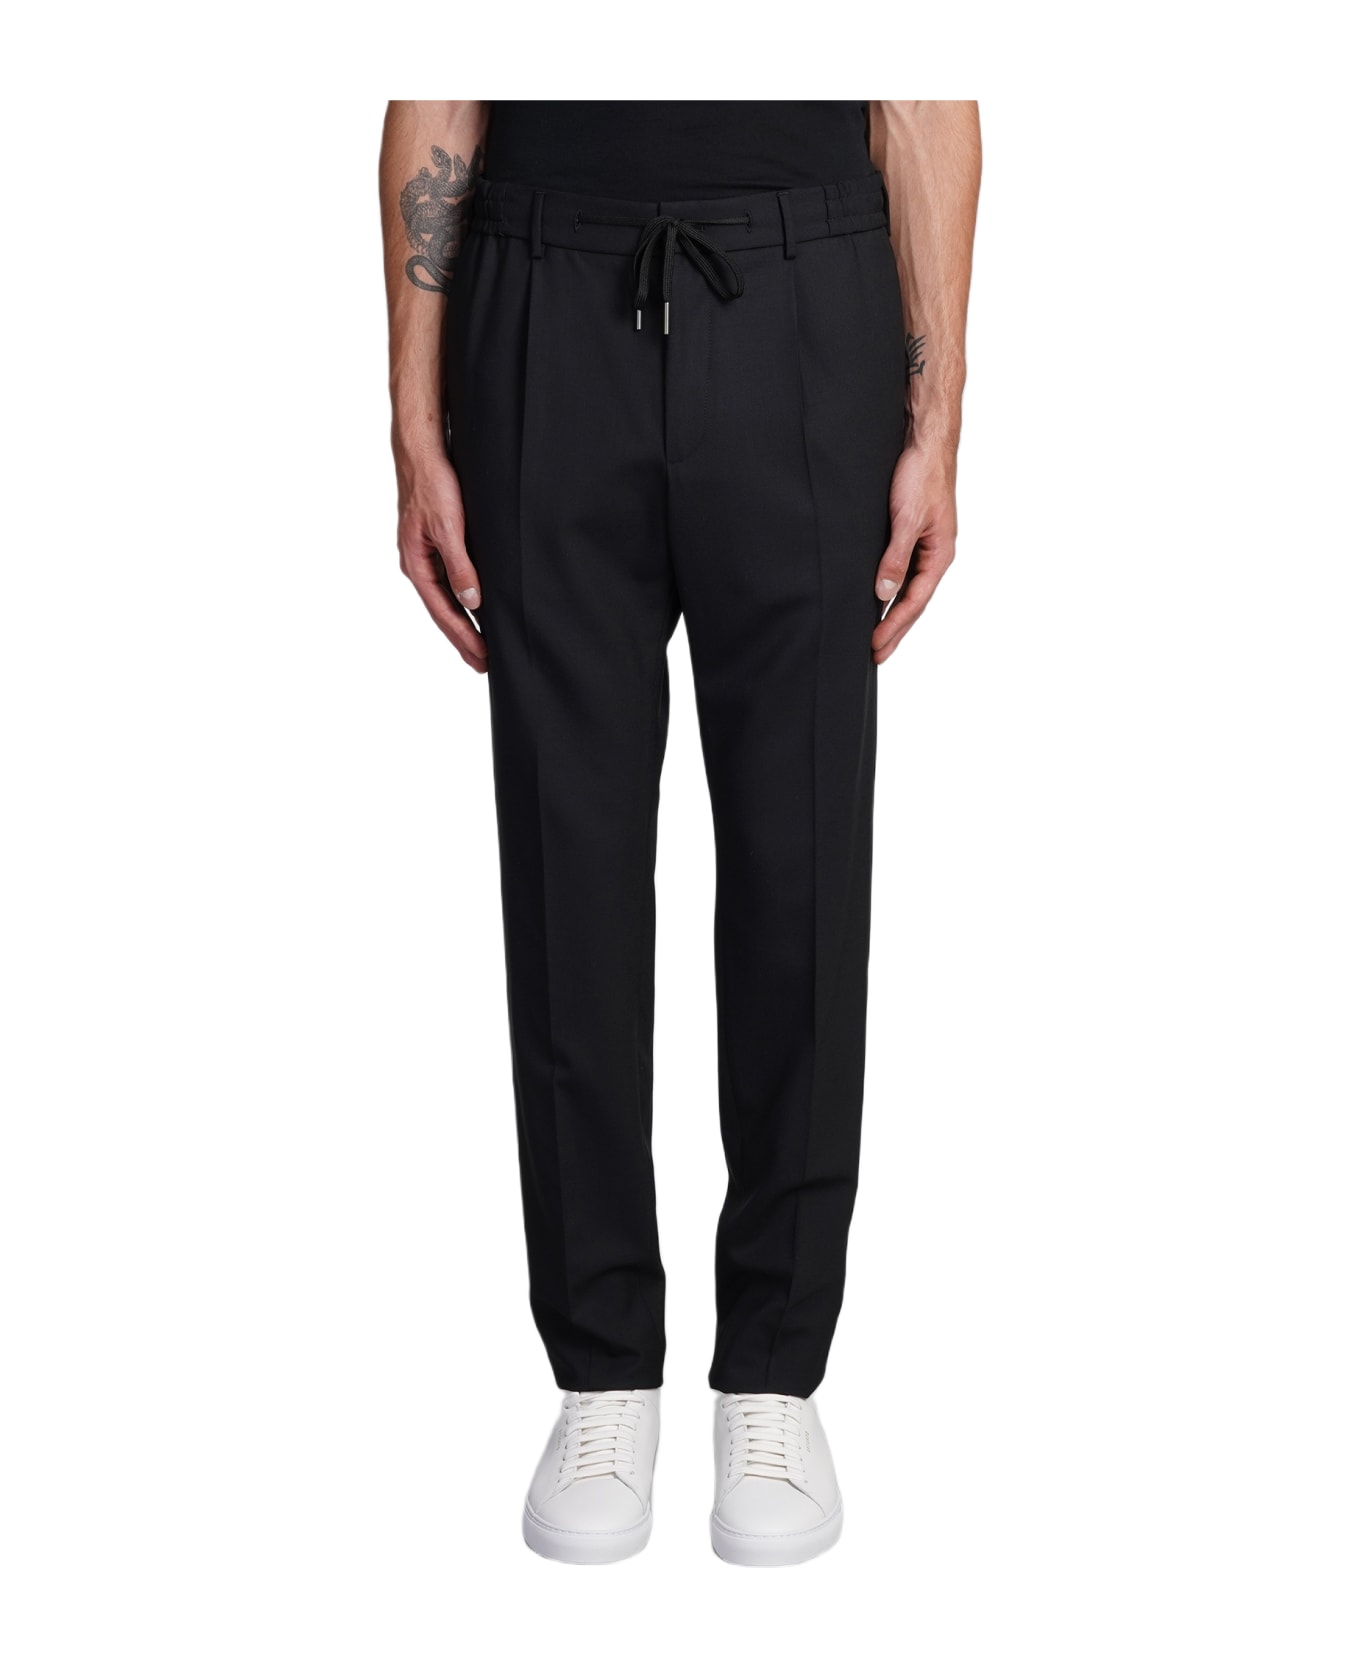 Tagliatore 0205 Pants In Black Polyester - black